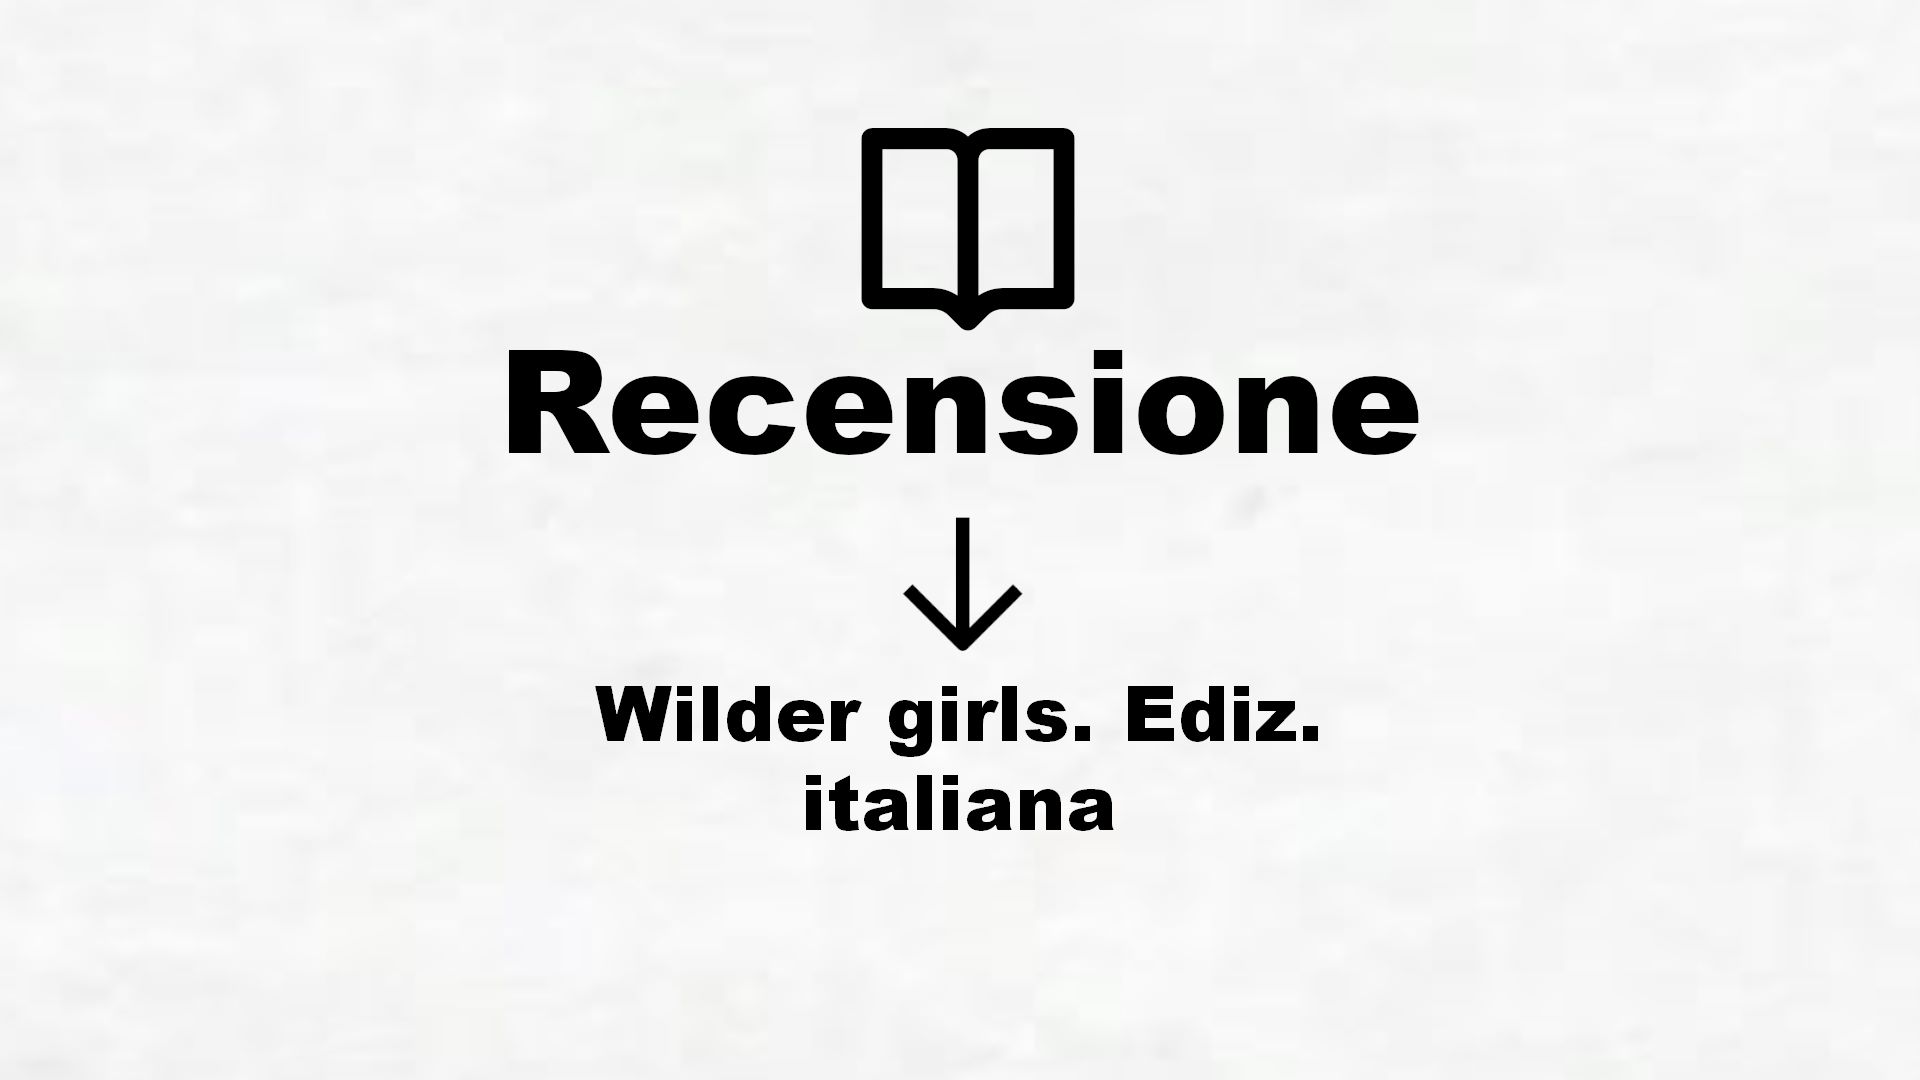 Wilder girls. Ediz. italiana – Recensione Libro